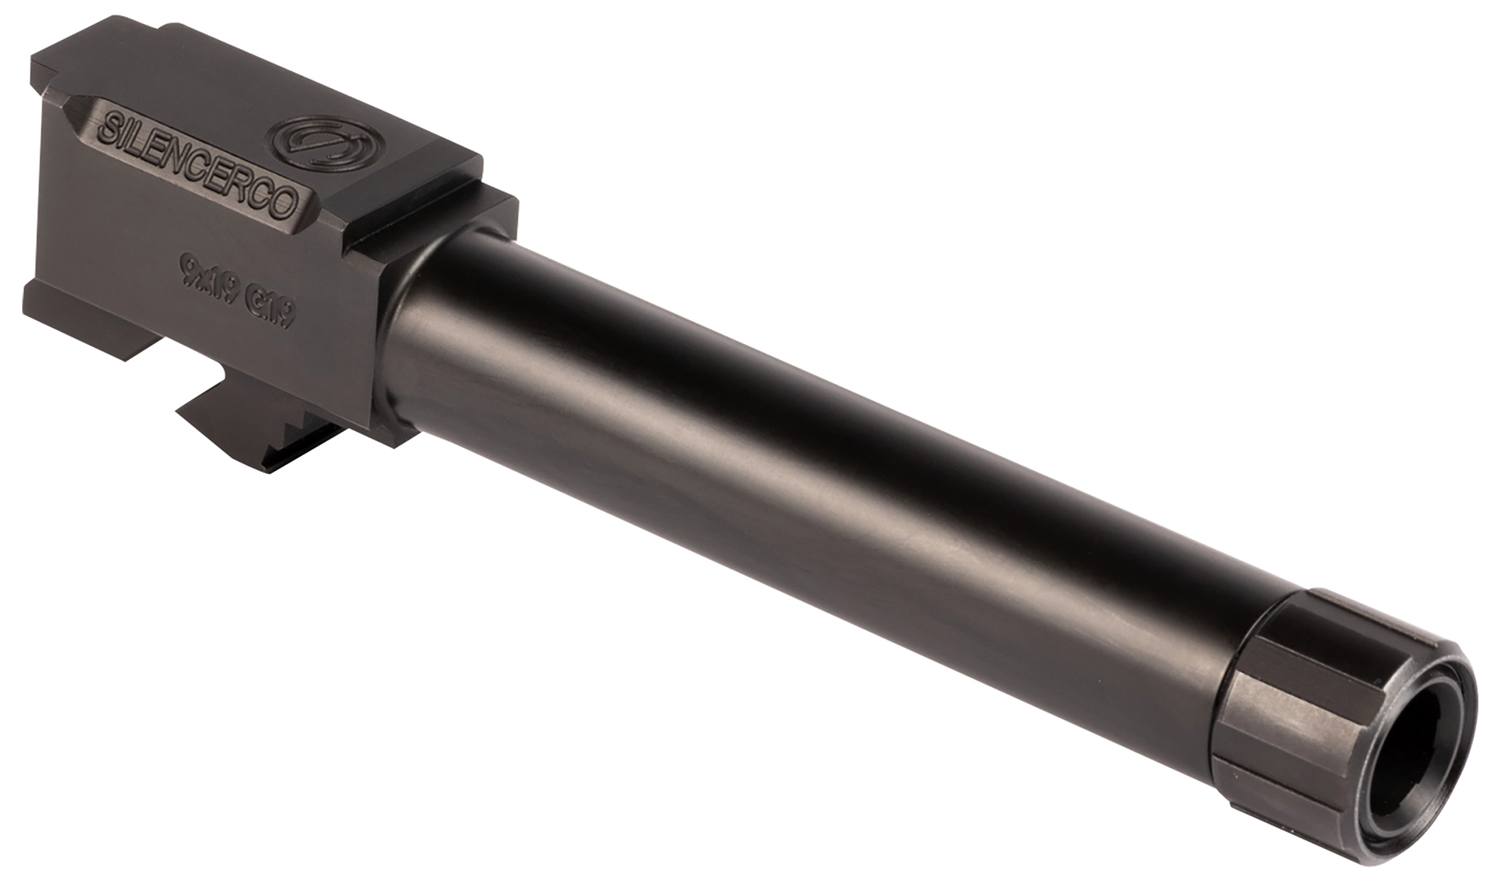 SilencerCo AC862 Threaded Barrel 4.50" 9mm Luger, Black Nitride Stainless Steel, Fits Glock 19 Gen 1-5/19X/G45